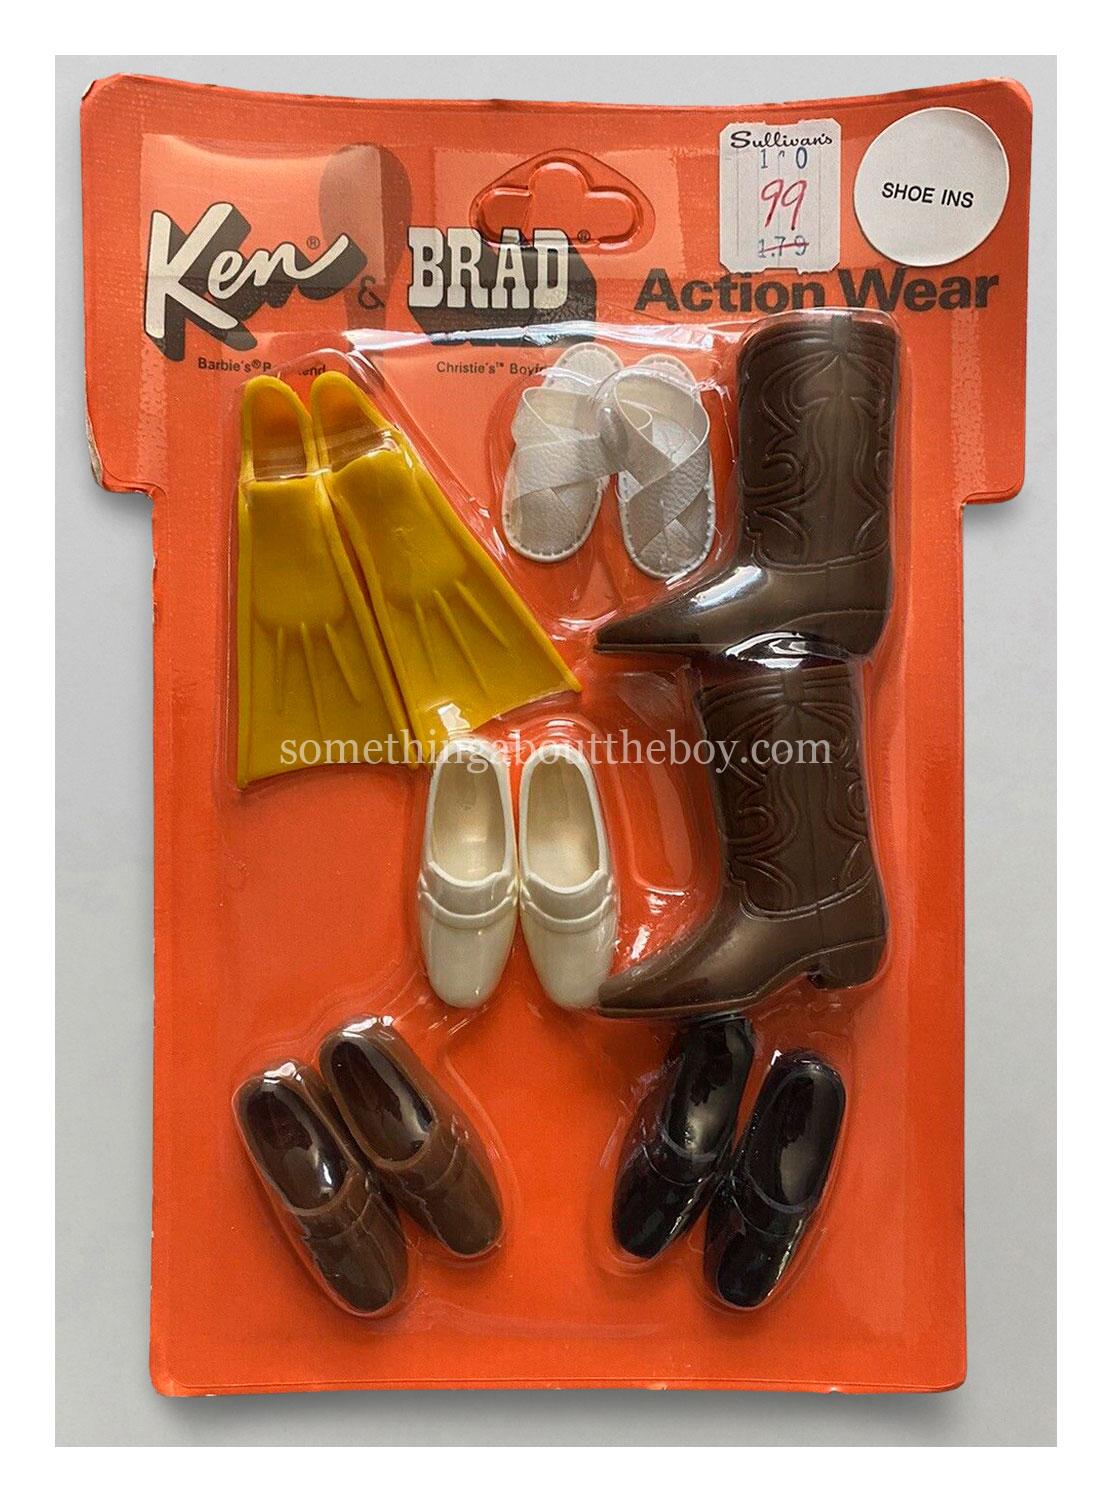 1971 Action Wear Shoe Ins in original packaging